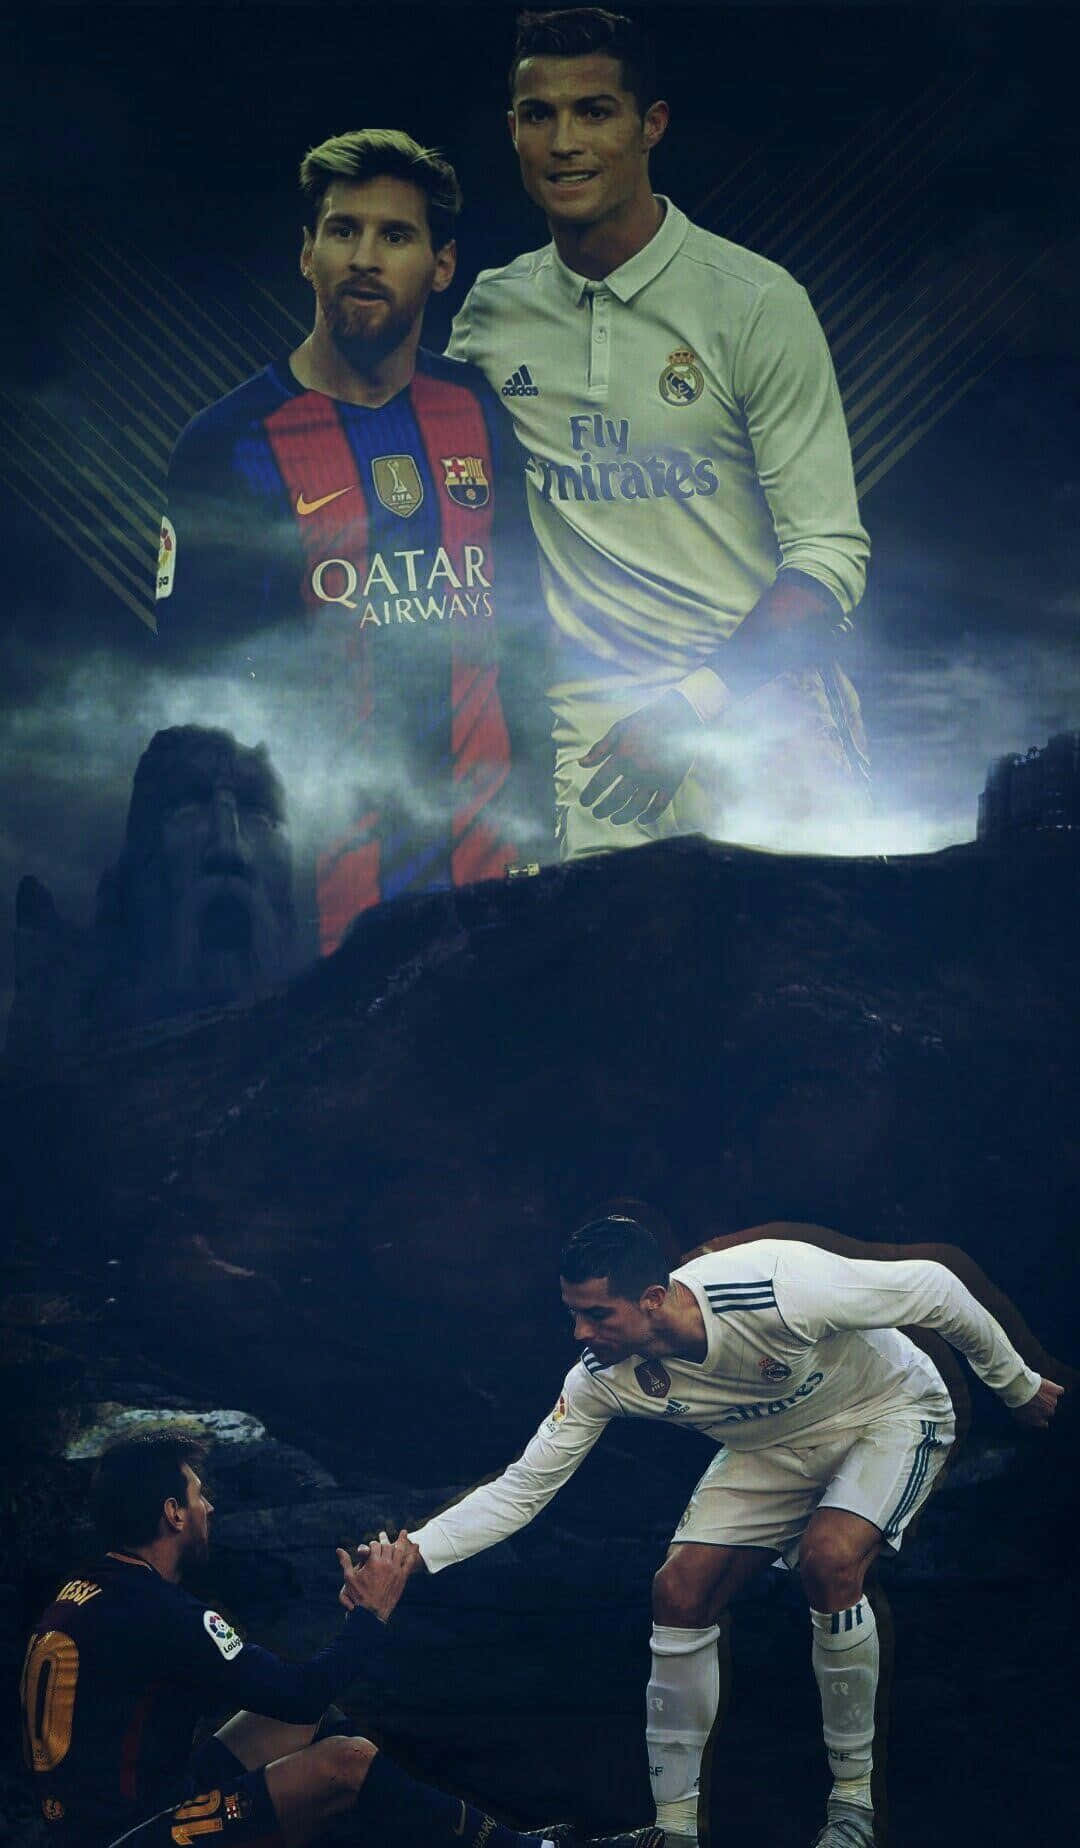 Download Ronaldo Messi Football Legends Collage Wallpaper | Wallpapers.com